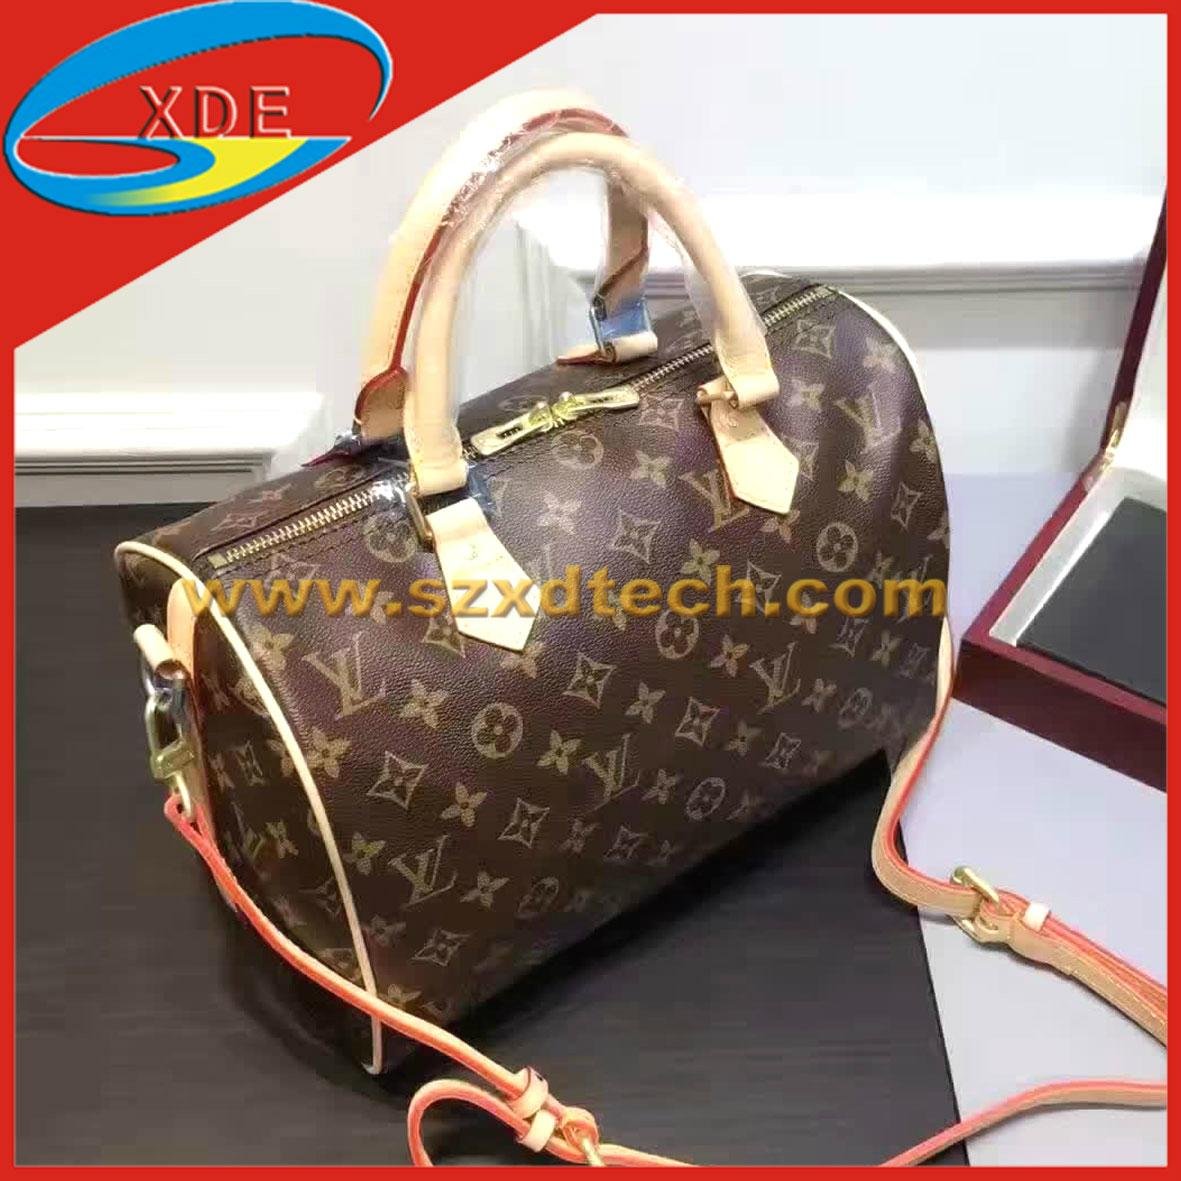 LV Handbags LV bags Louis Vuitton bags Louis Vuitton handbags - XD-LV 8 (China Manufacturer ...